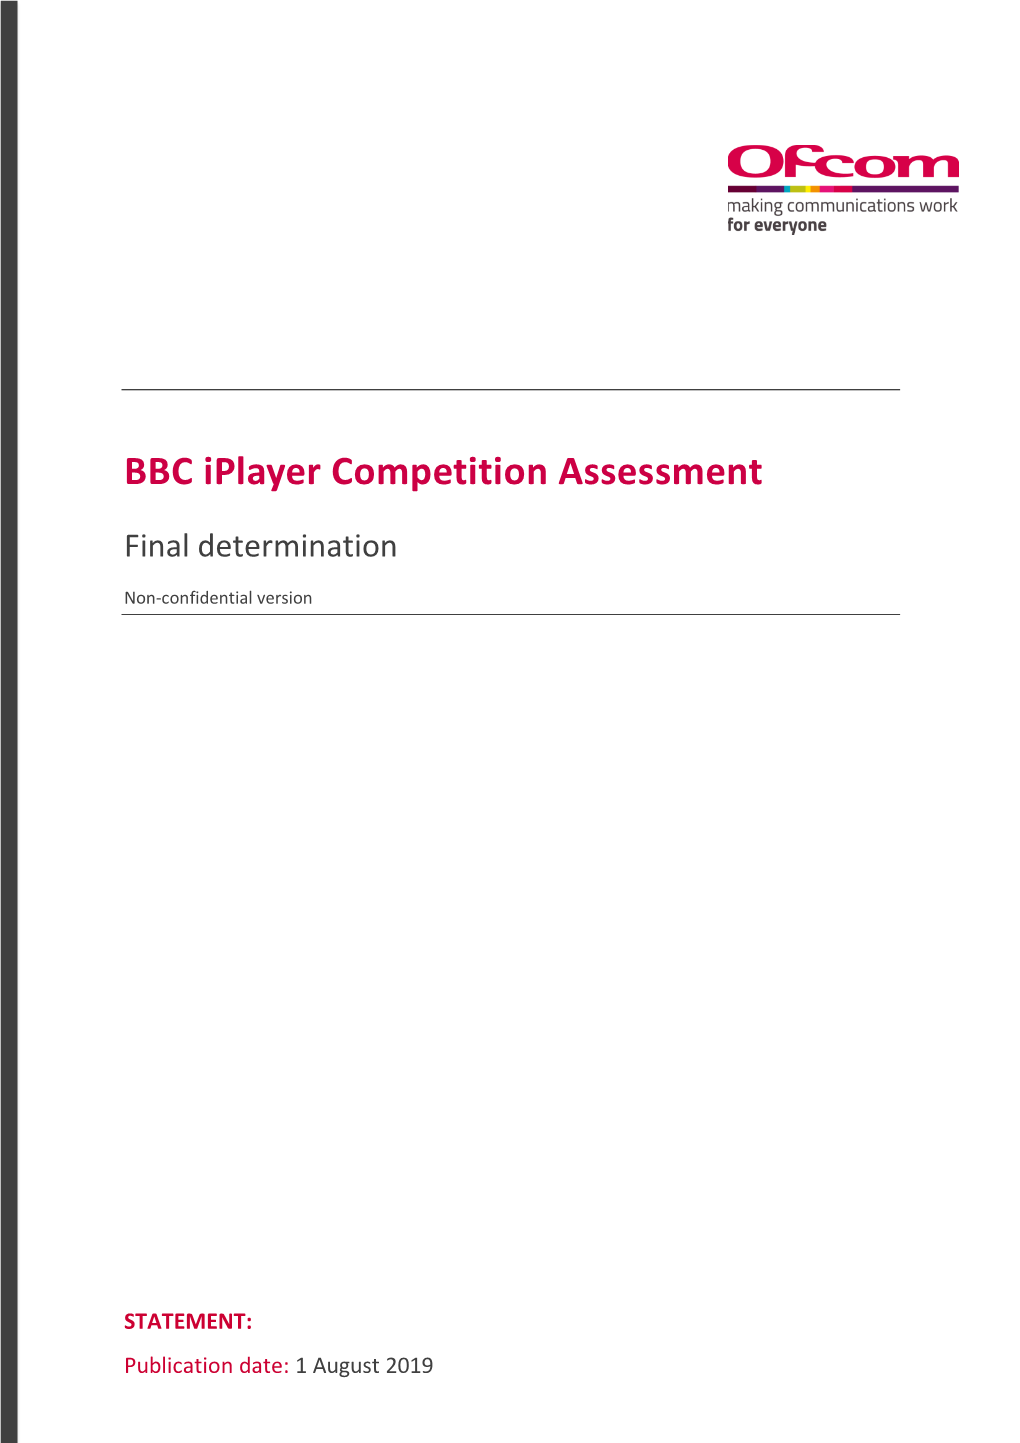 BBC Iplayer Competition Assessment: Final Determination